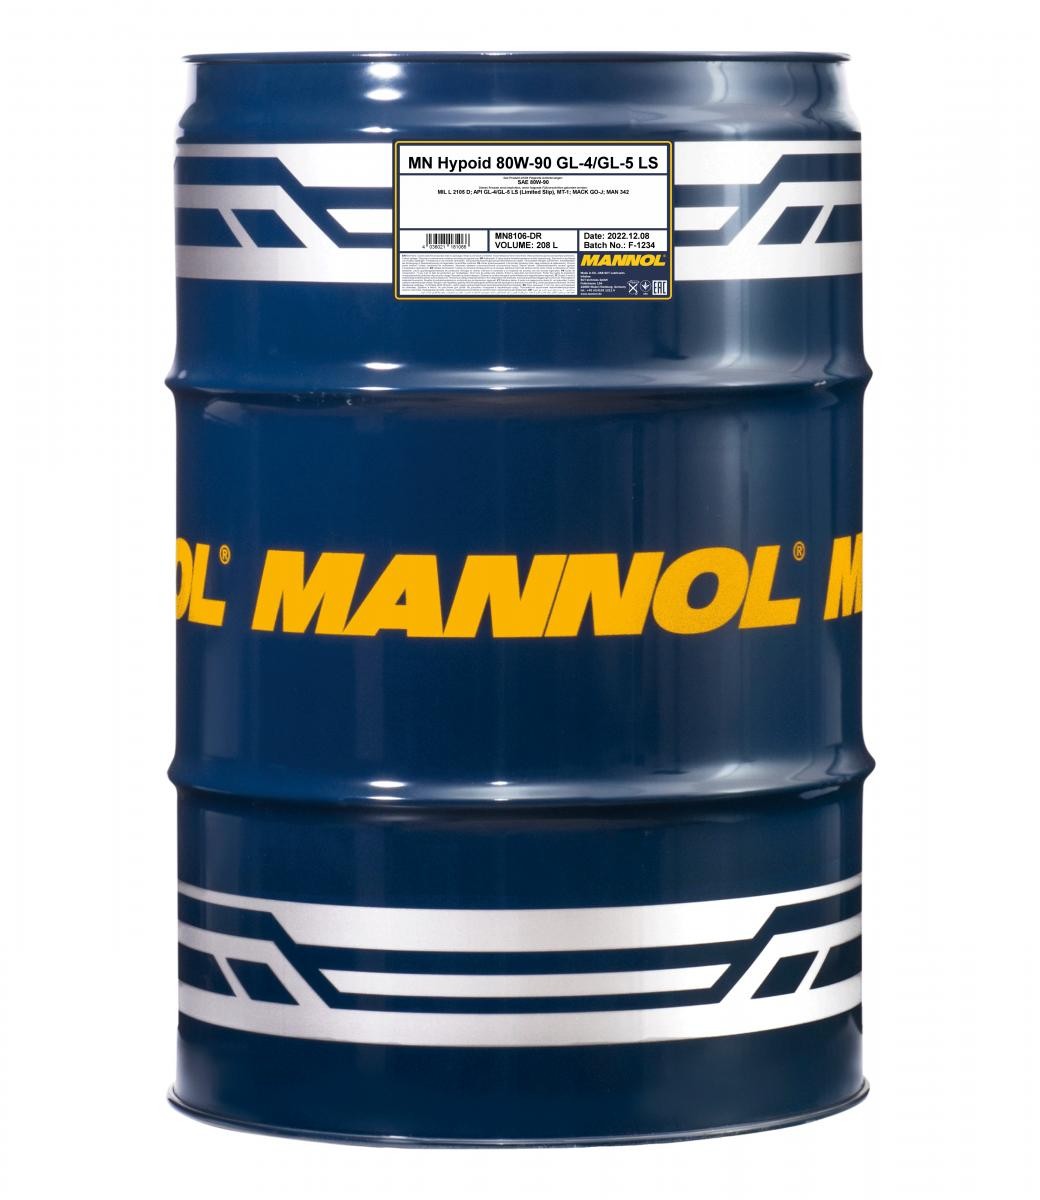 MANNOL Hypoid GL-5 80W-90, Mineralöl, Inhalt: 208l MIL-L 2105 D, MAN 342, MACK GO-J Getriebeöl MN8106-DR kaufen